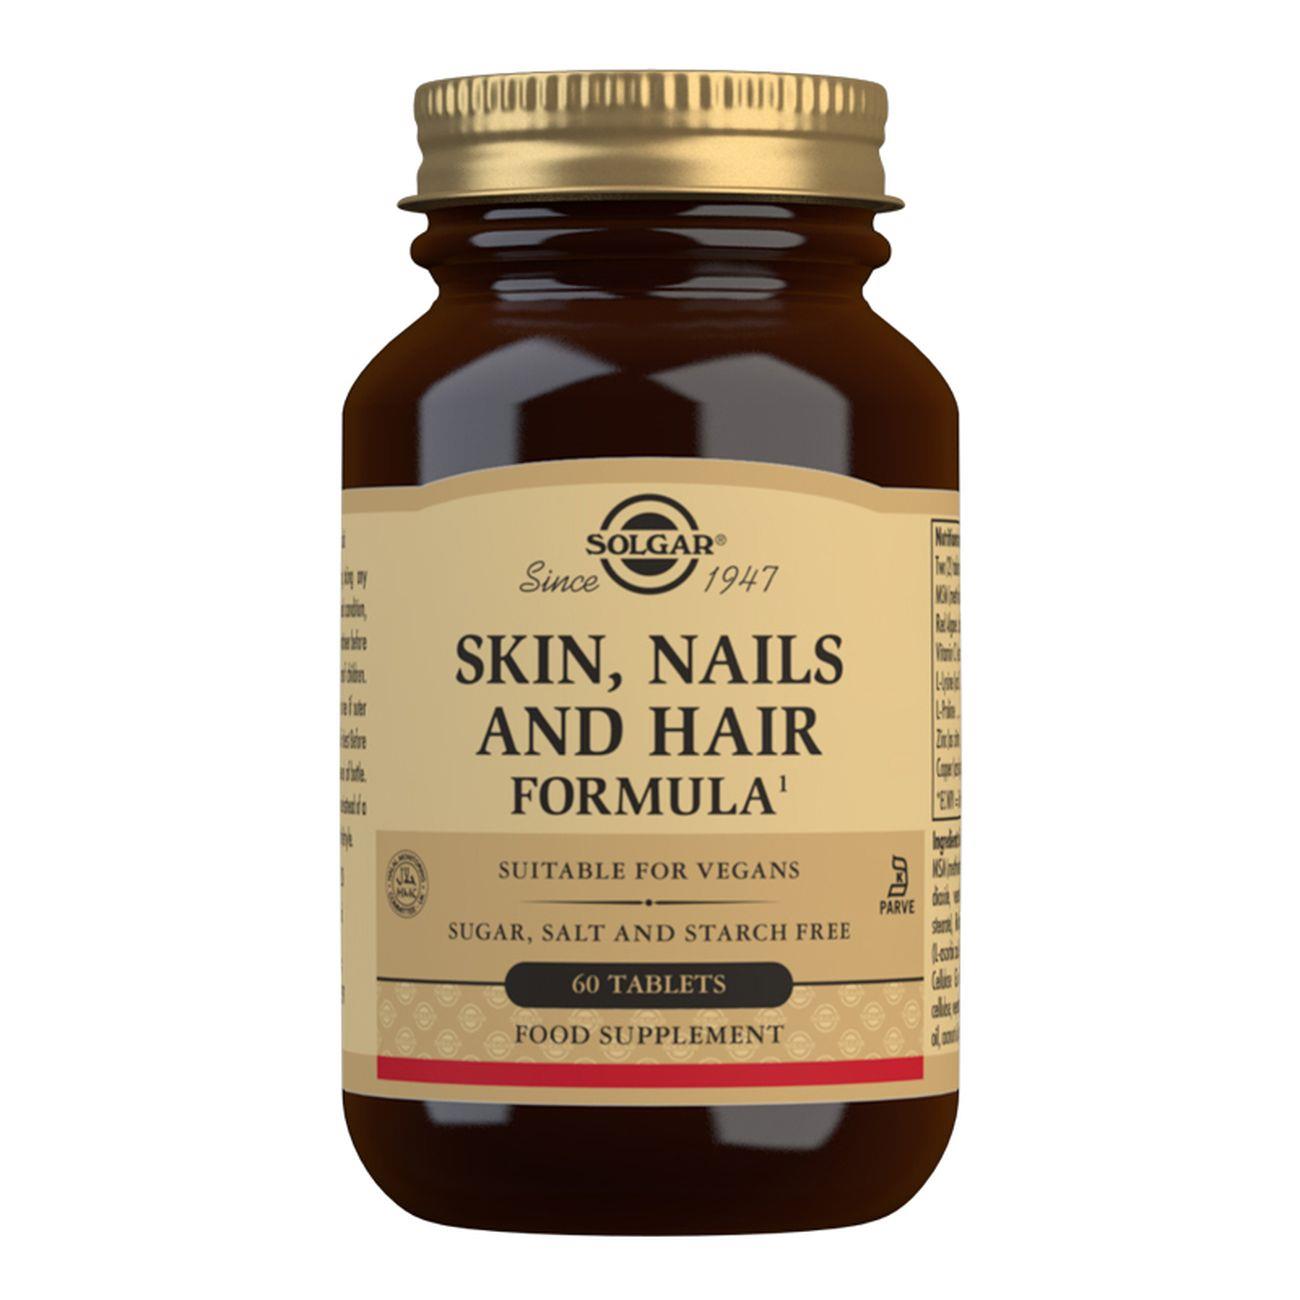 Skin, Nails and Hair - 60 Tablets